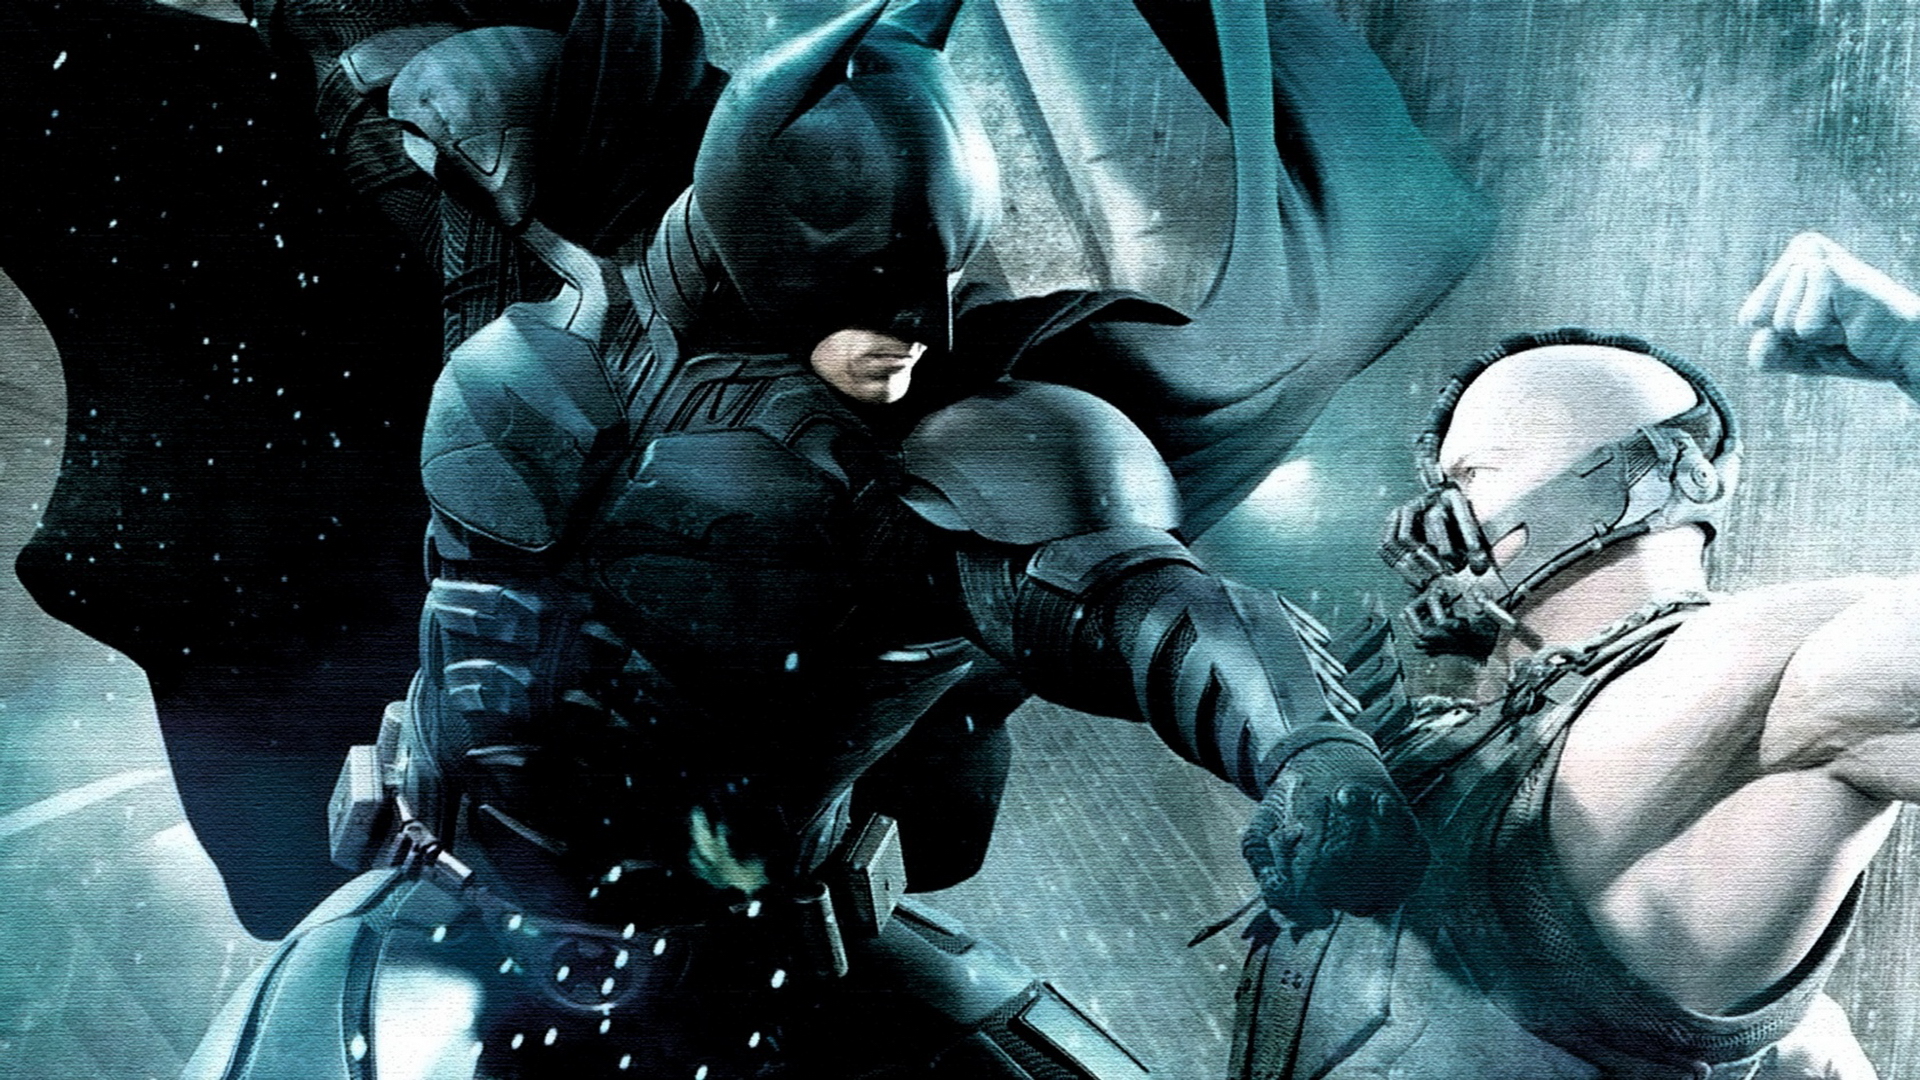 Batman Vs Bane Wallpaper Image Amp Pictures Becuo